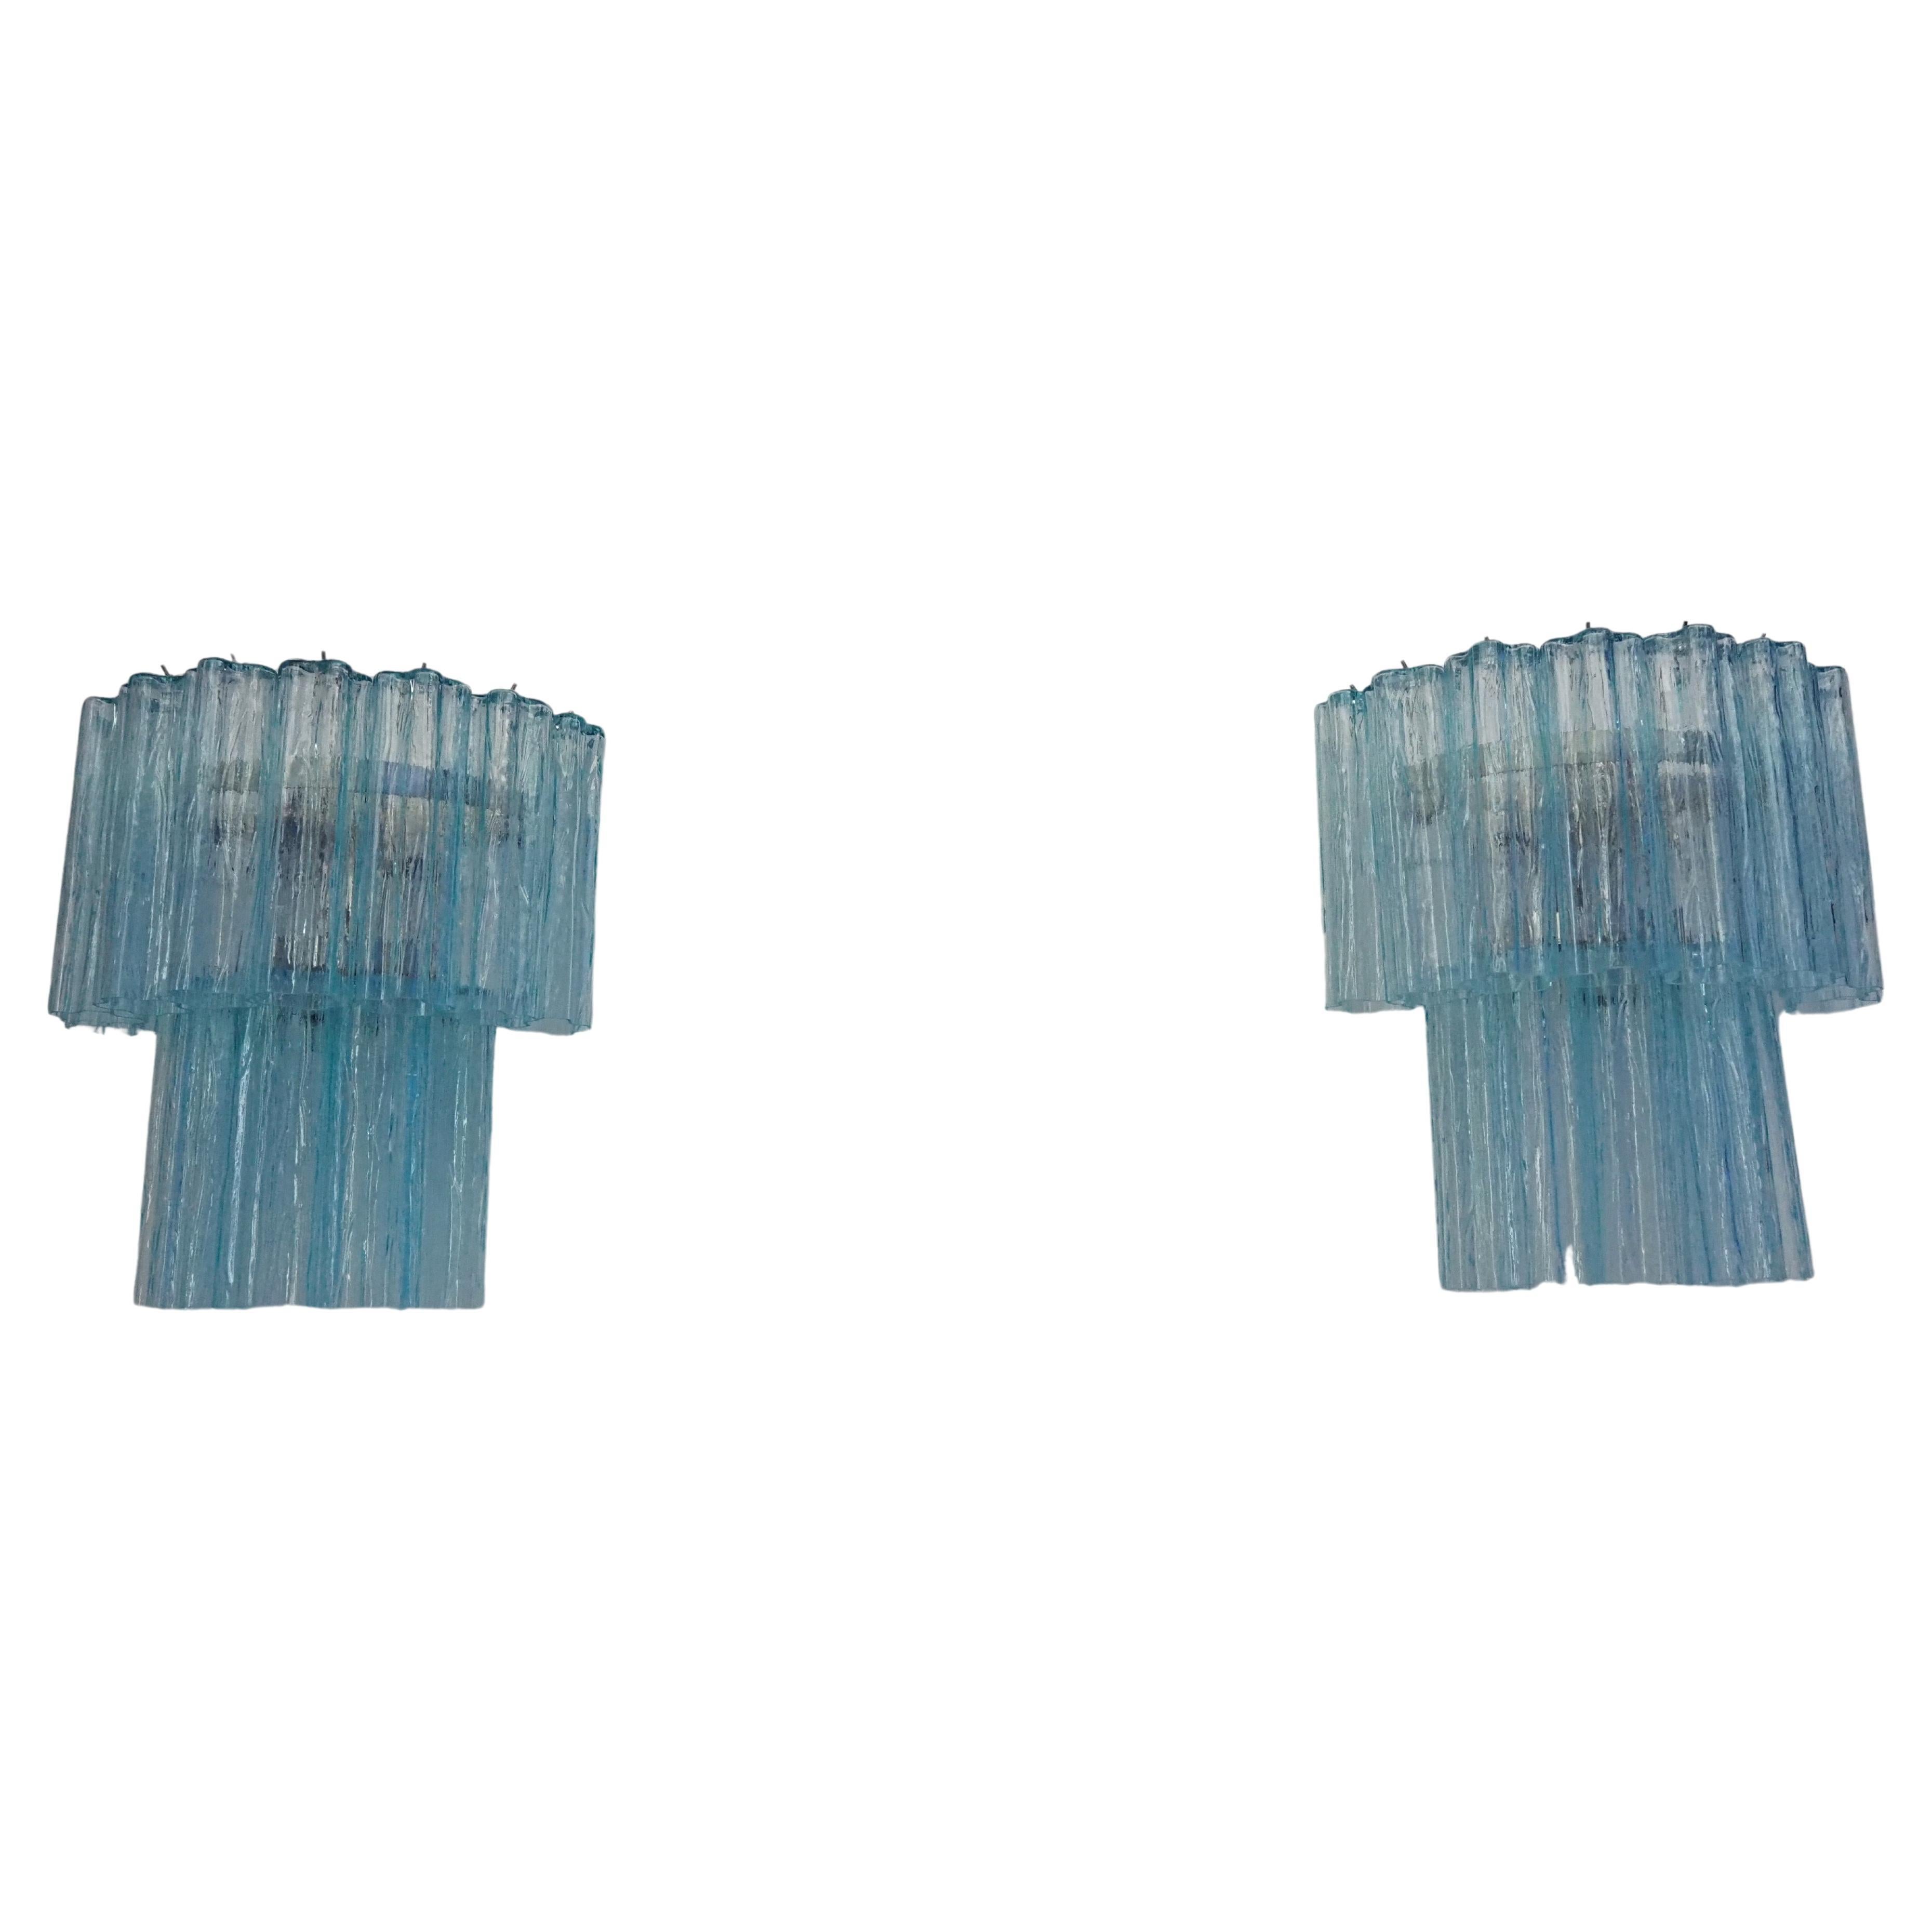 Fantastisches Paar Muranoglasröhren-Wandleuchter - 13 blaue Glasröhren